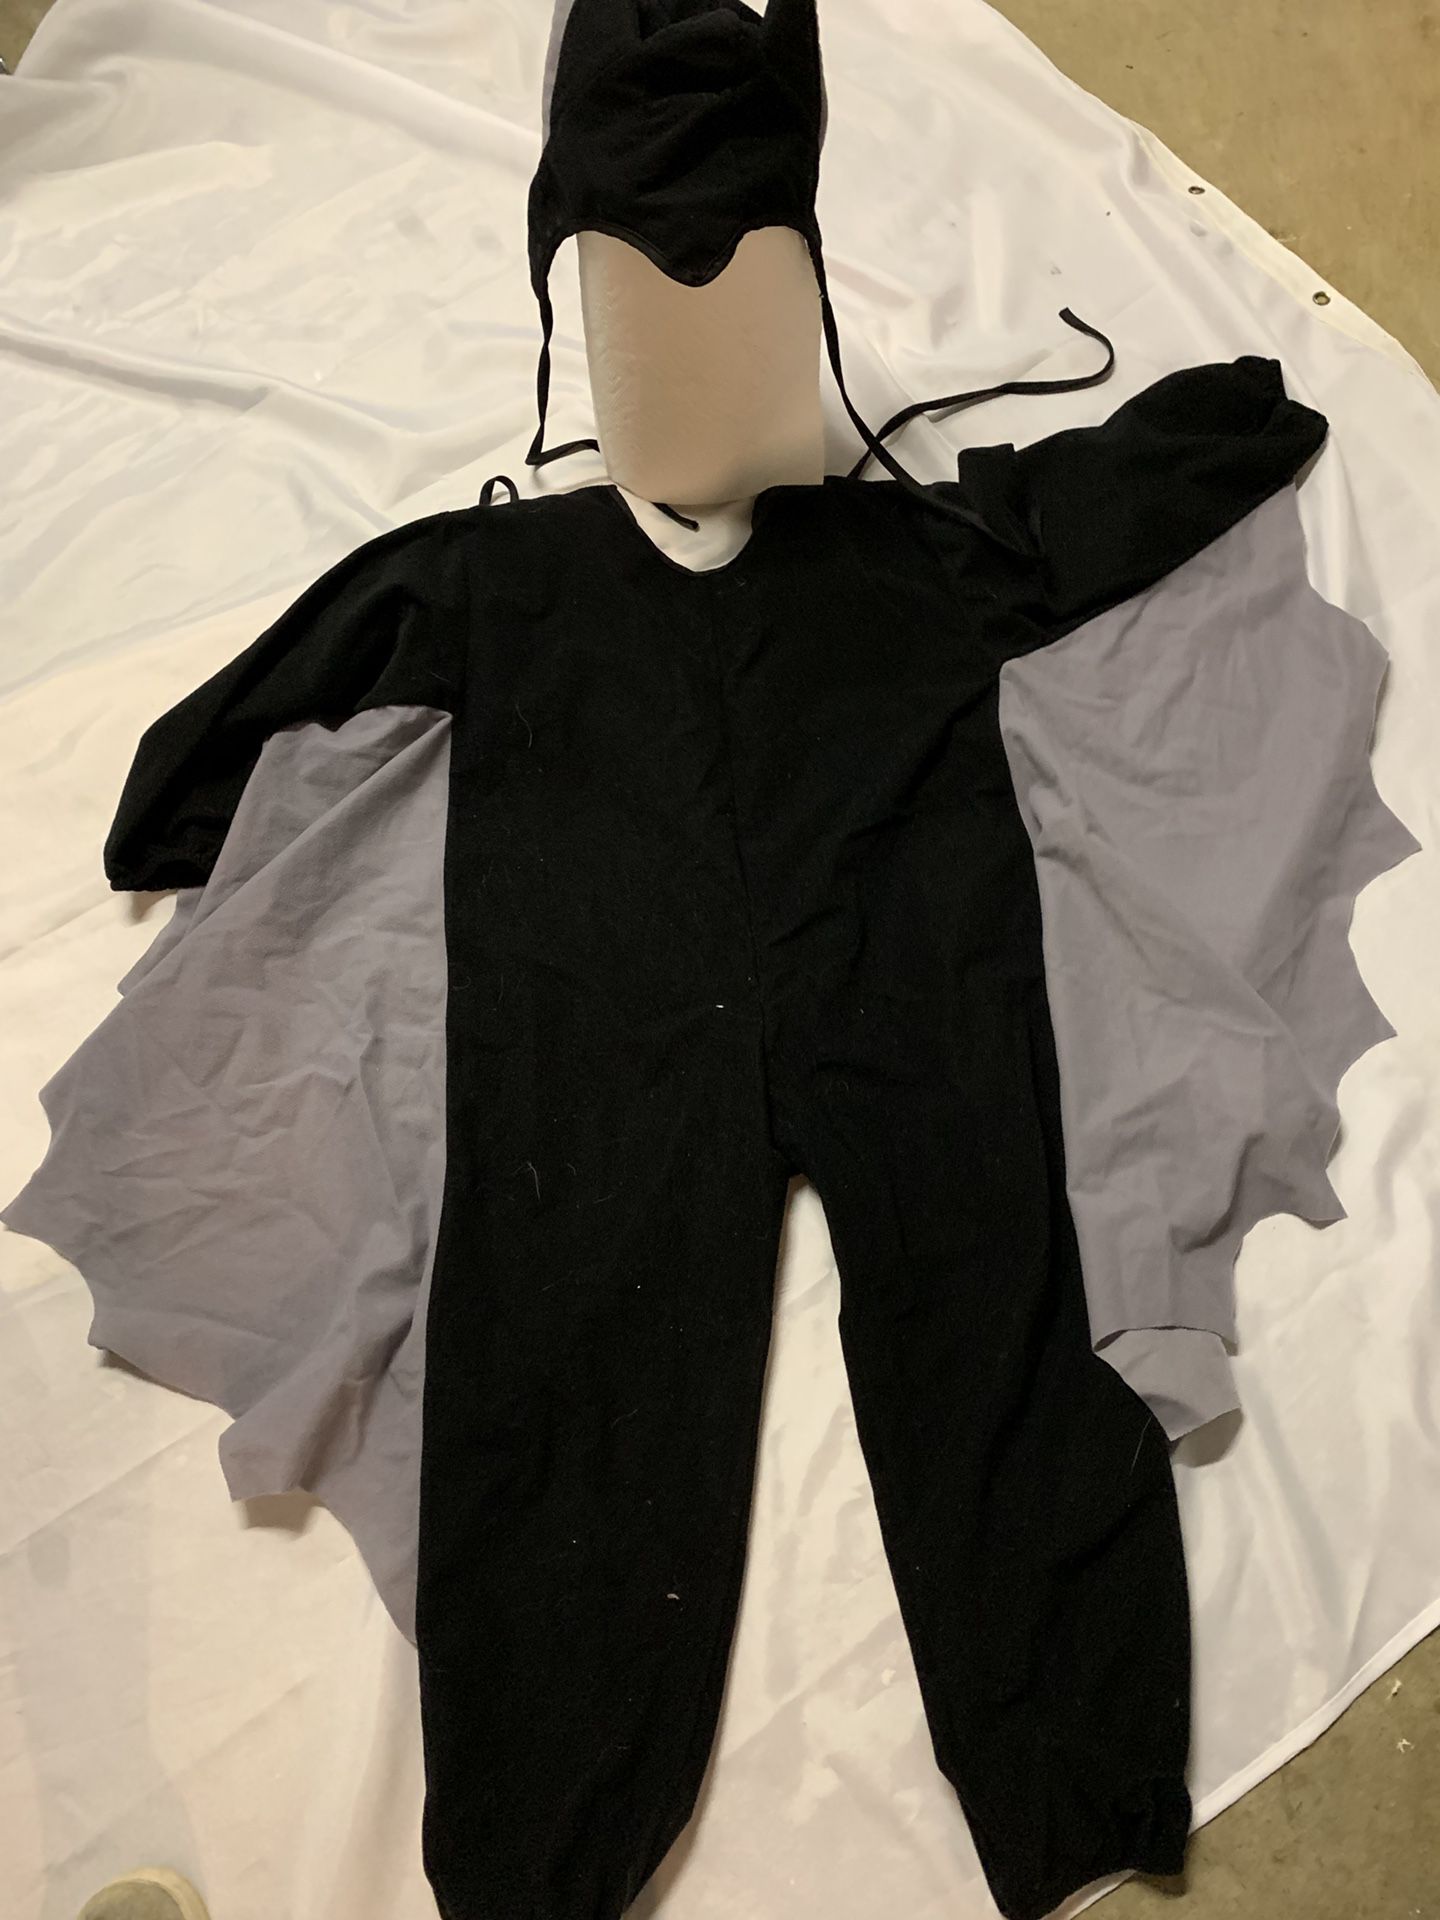 Bat costume size 8